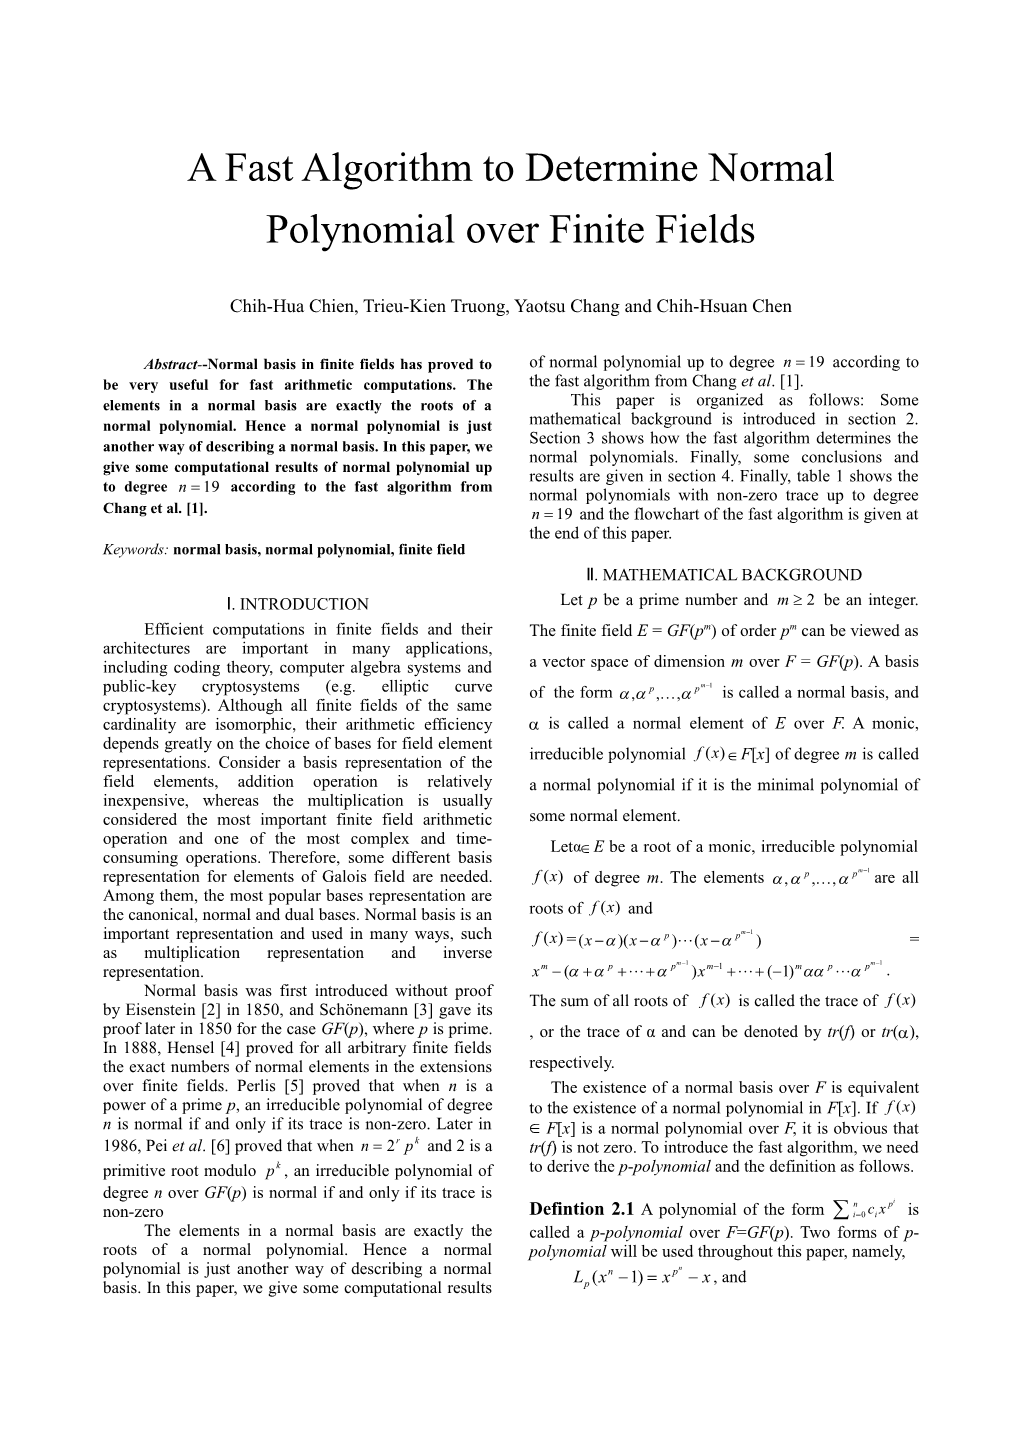 A Fast Algorithm to Determine Normal Polynomial Over Finite Field